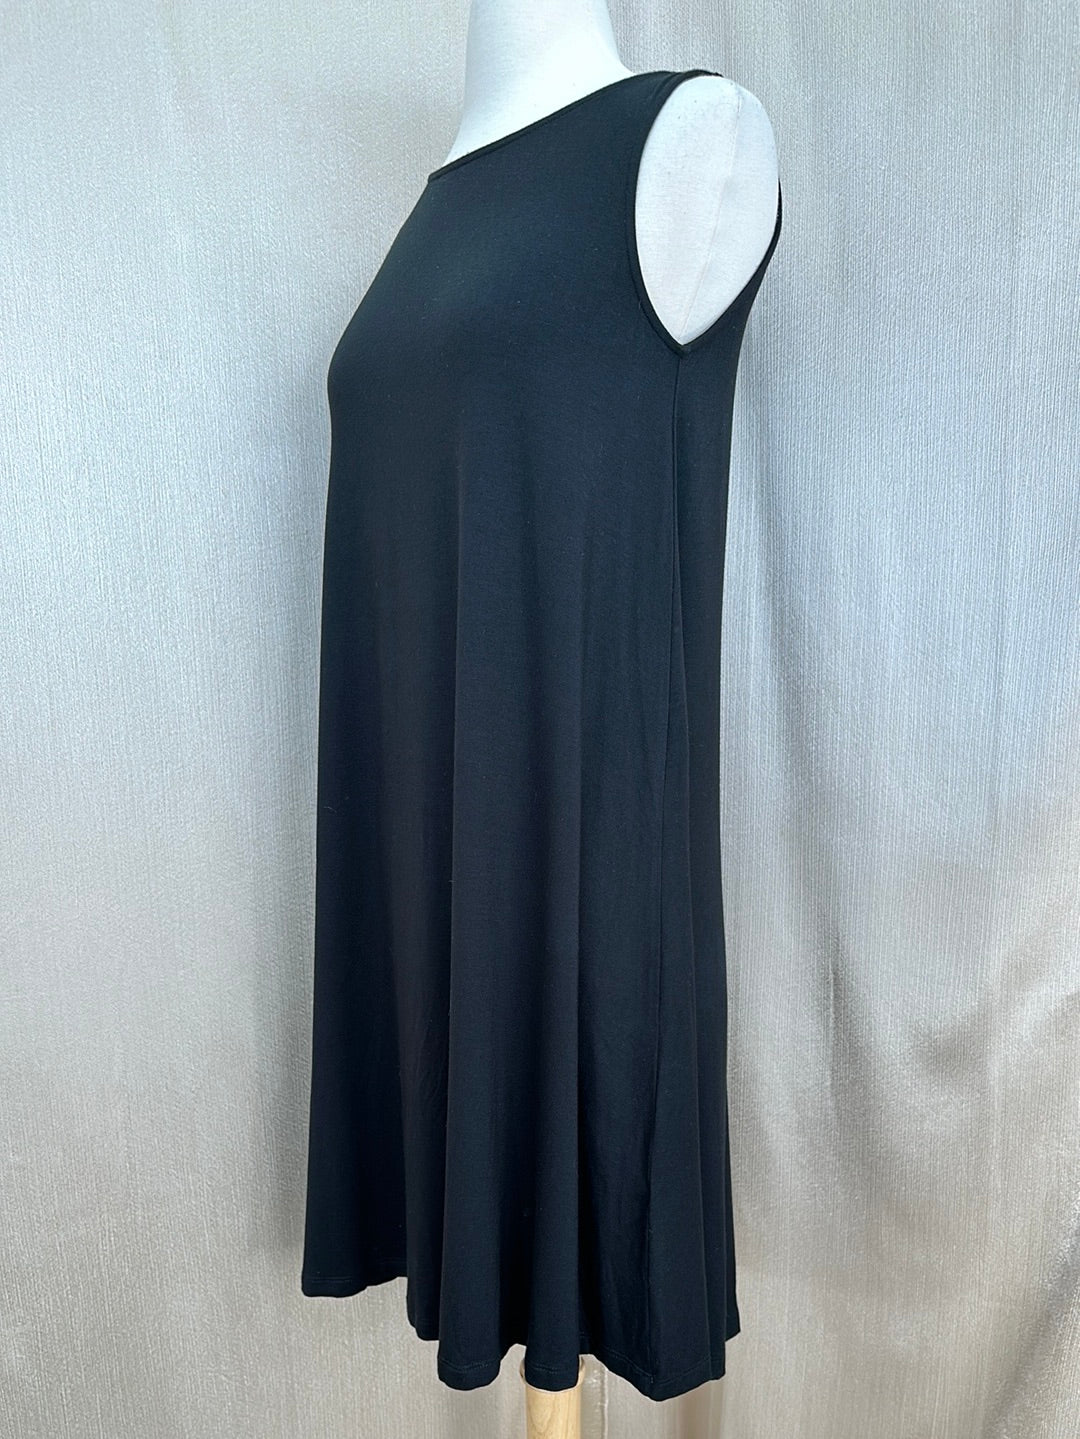 COMFY USA black Modal Sleeveless Swing Dress - XS